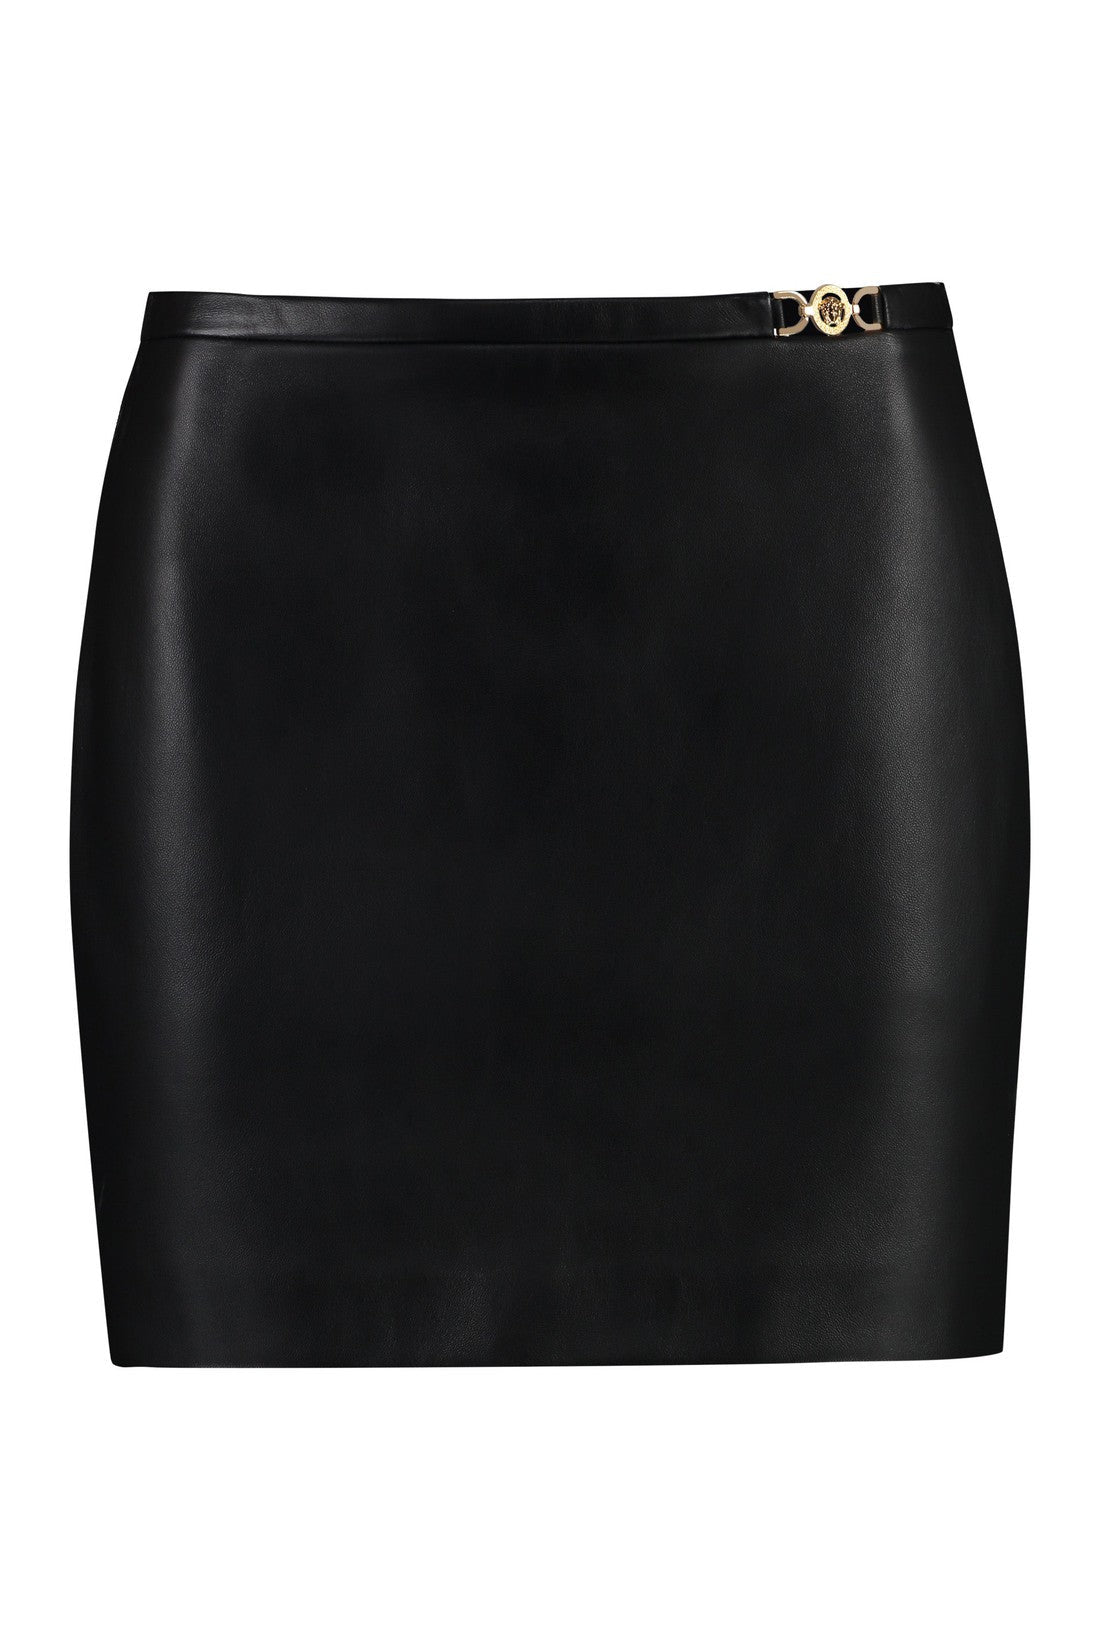 Versace-OUTLET-SALE-Leather mini skirt-ARCHIVIST